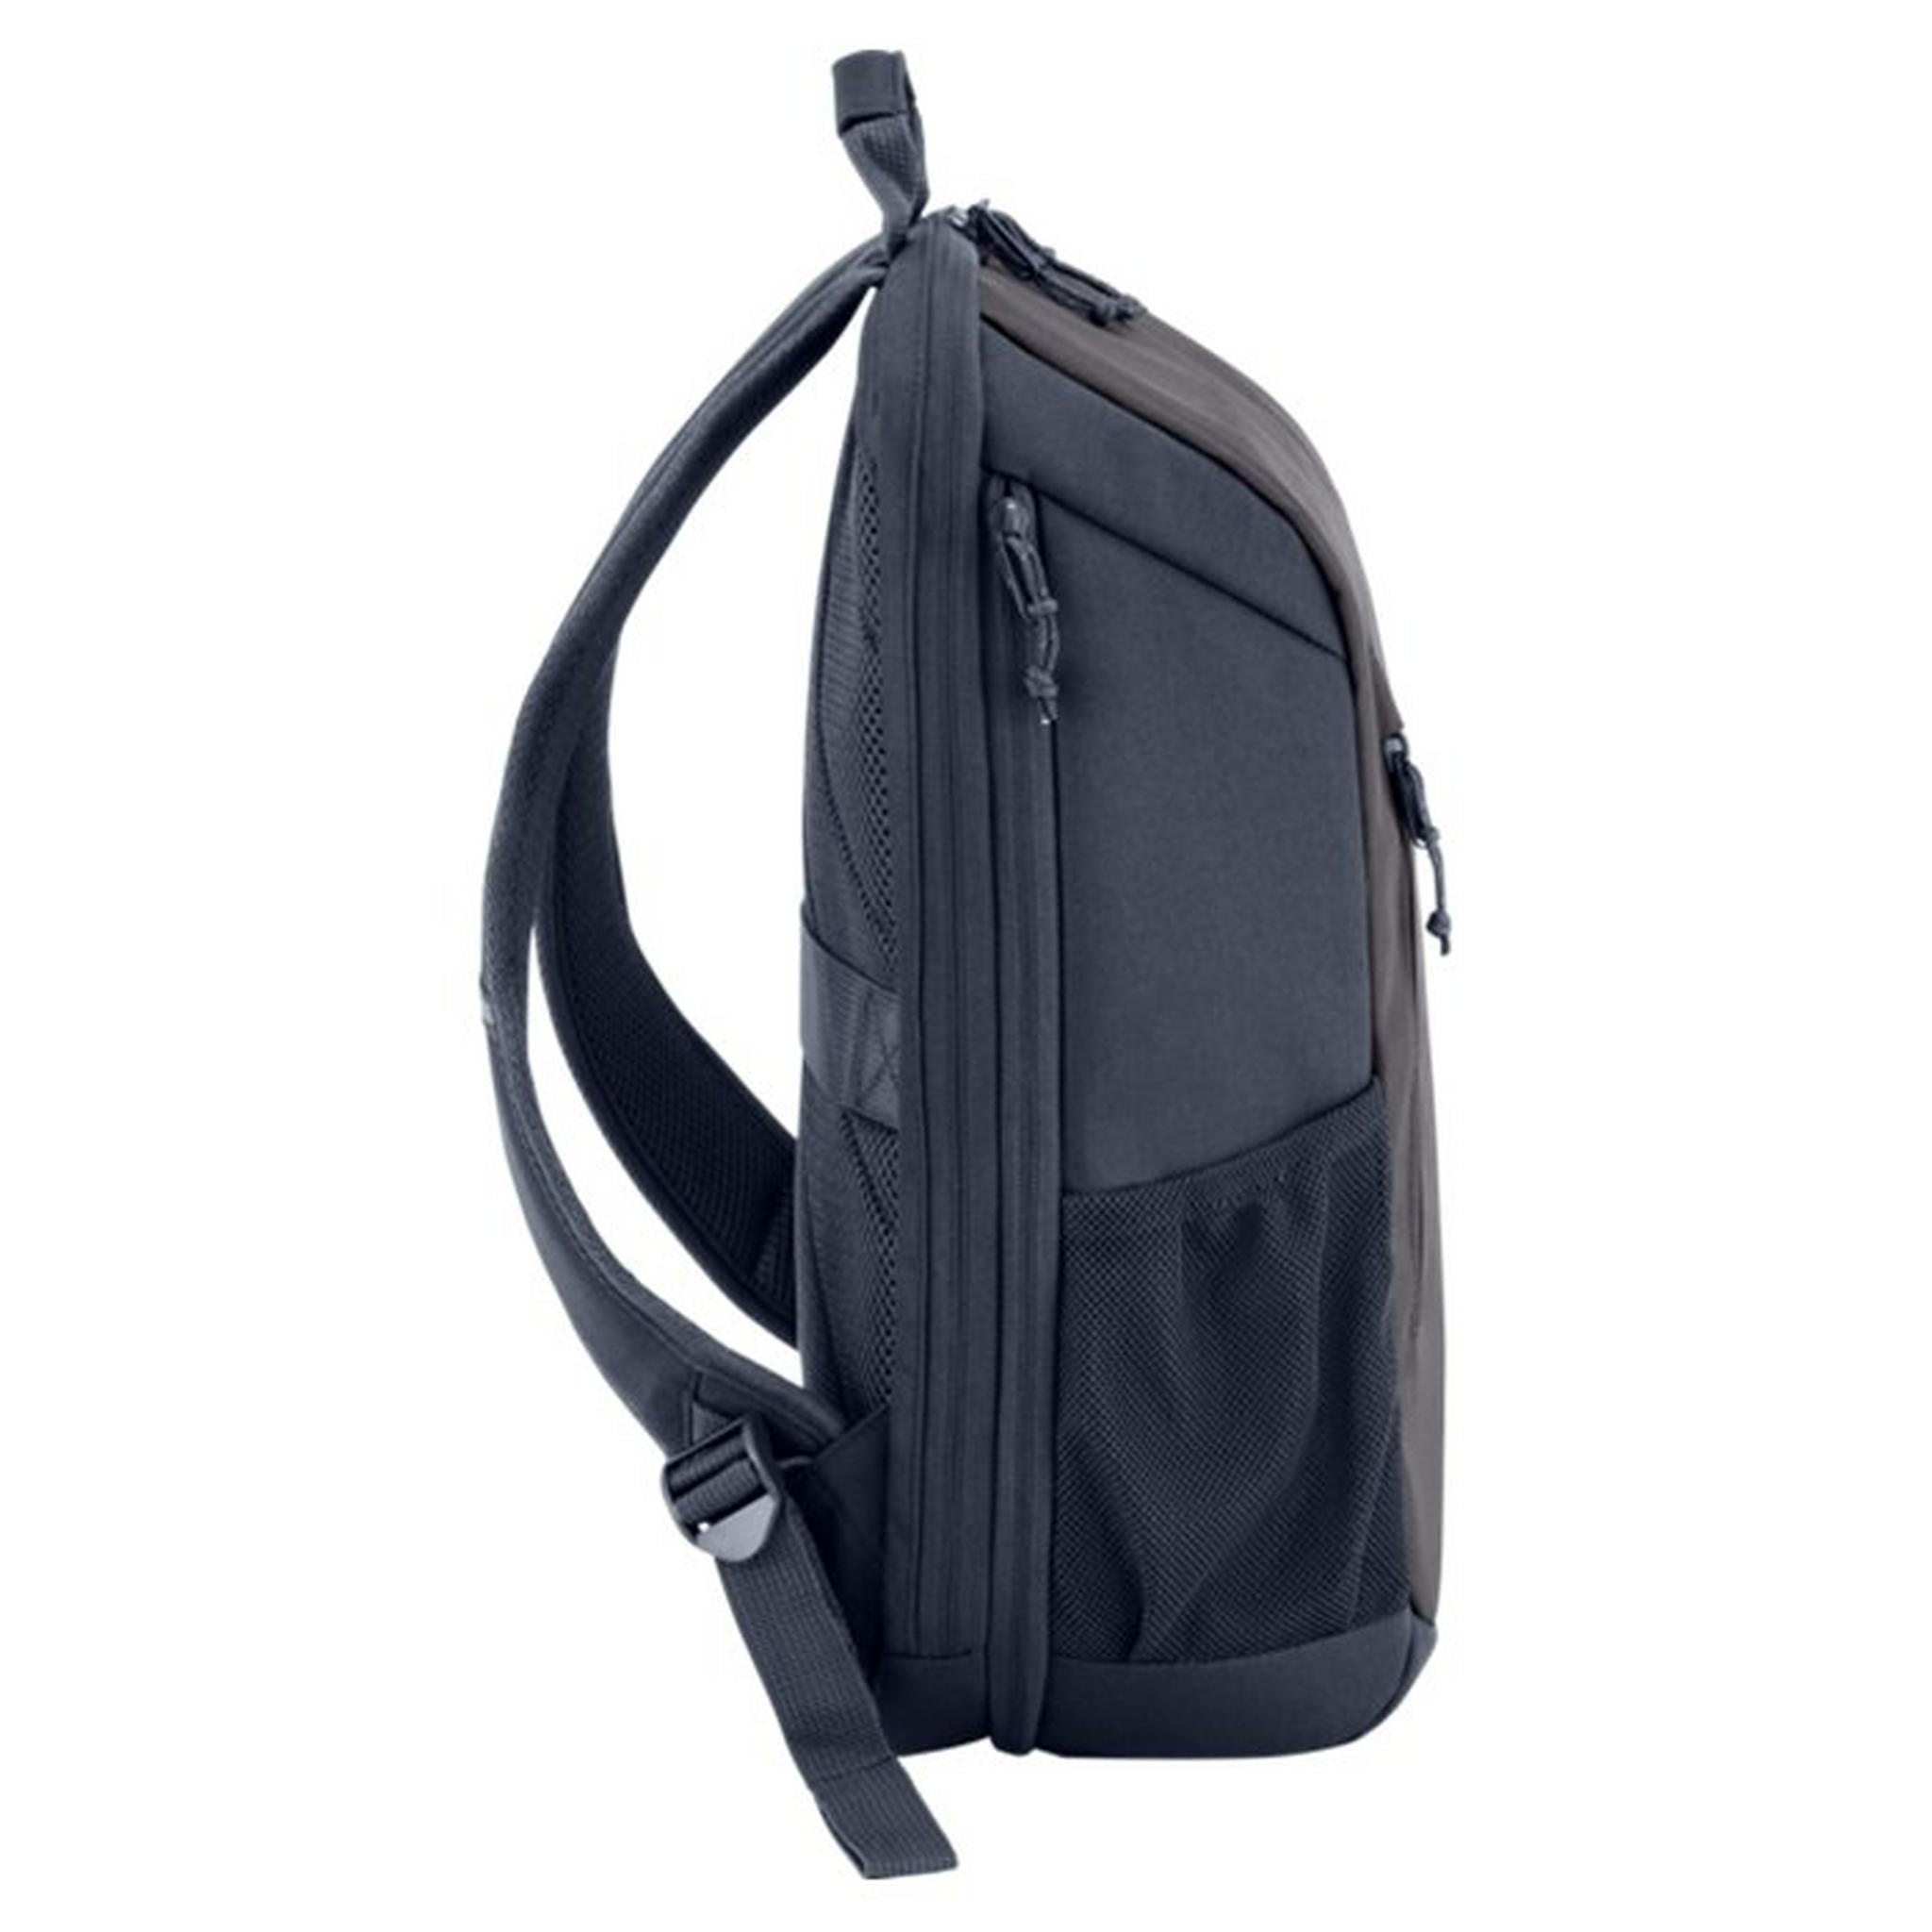 HP Travel Laptop Backpack, 15.6-inch, 6B8U6AA – Grey